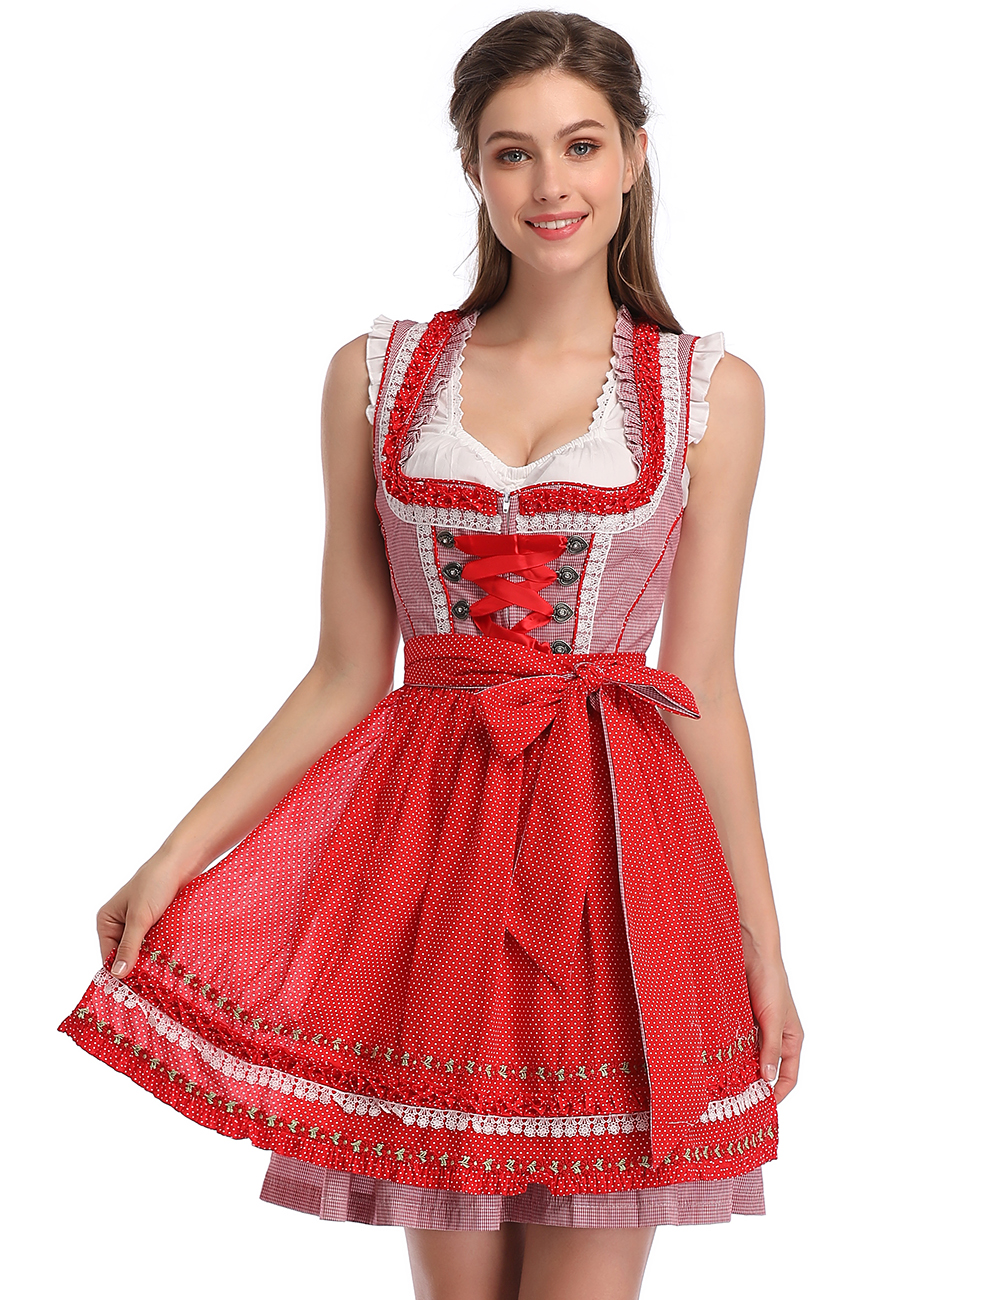 KOJOOIN Women's German Dirndl Dress Costumes Set for Bavarian Oktoberfest Halloween Carnival